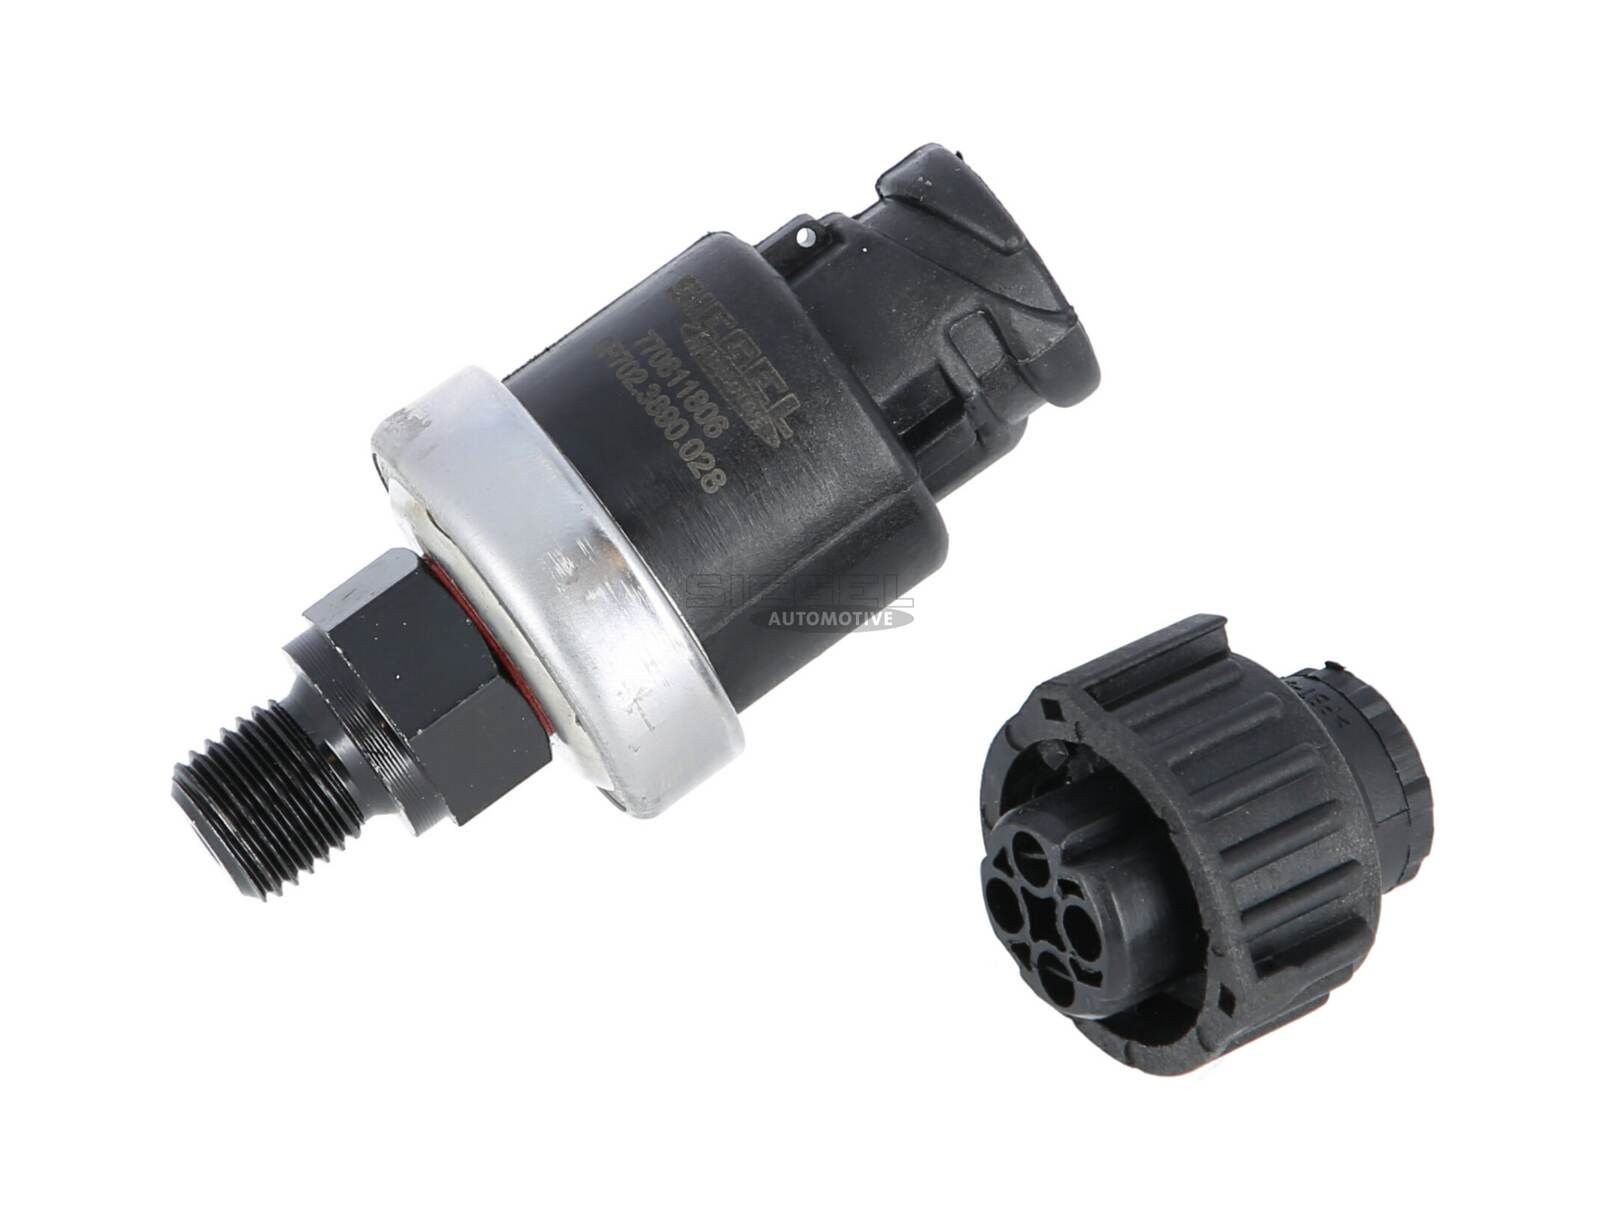 SIEGEL AUTOMOTIVE 2-pin connector, 24V Oil Pressure Switch SA5E0028 buy